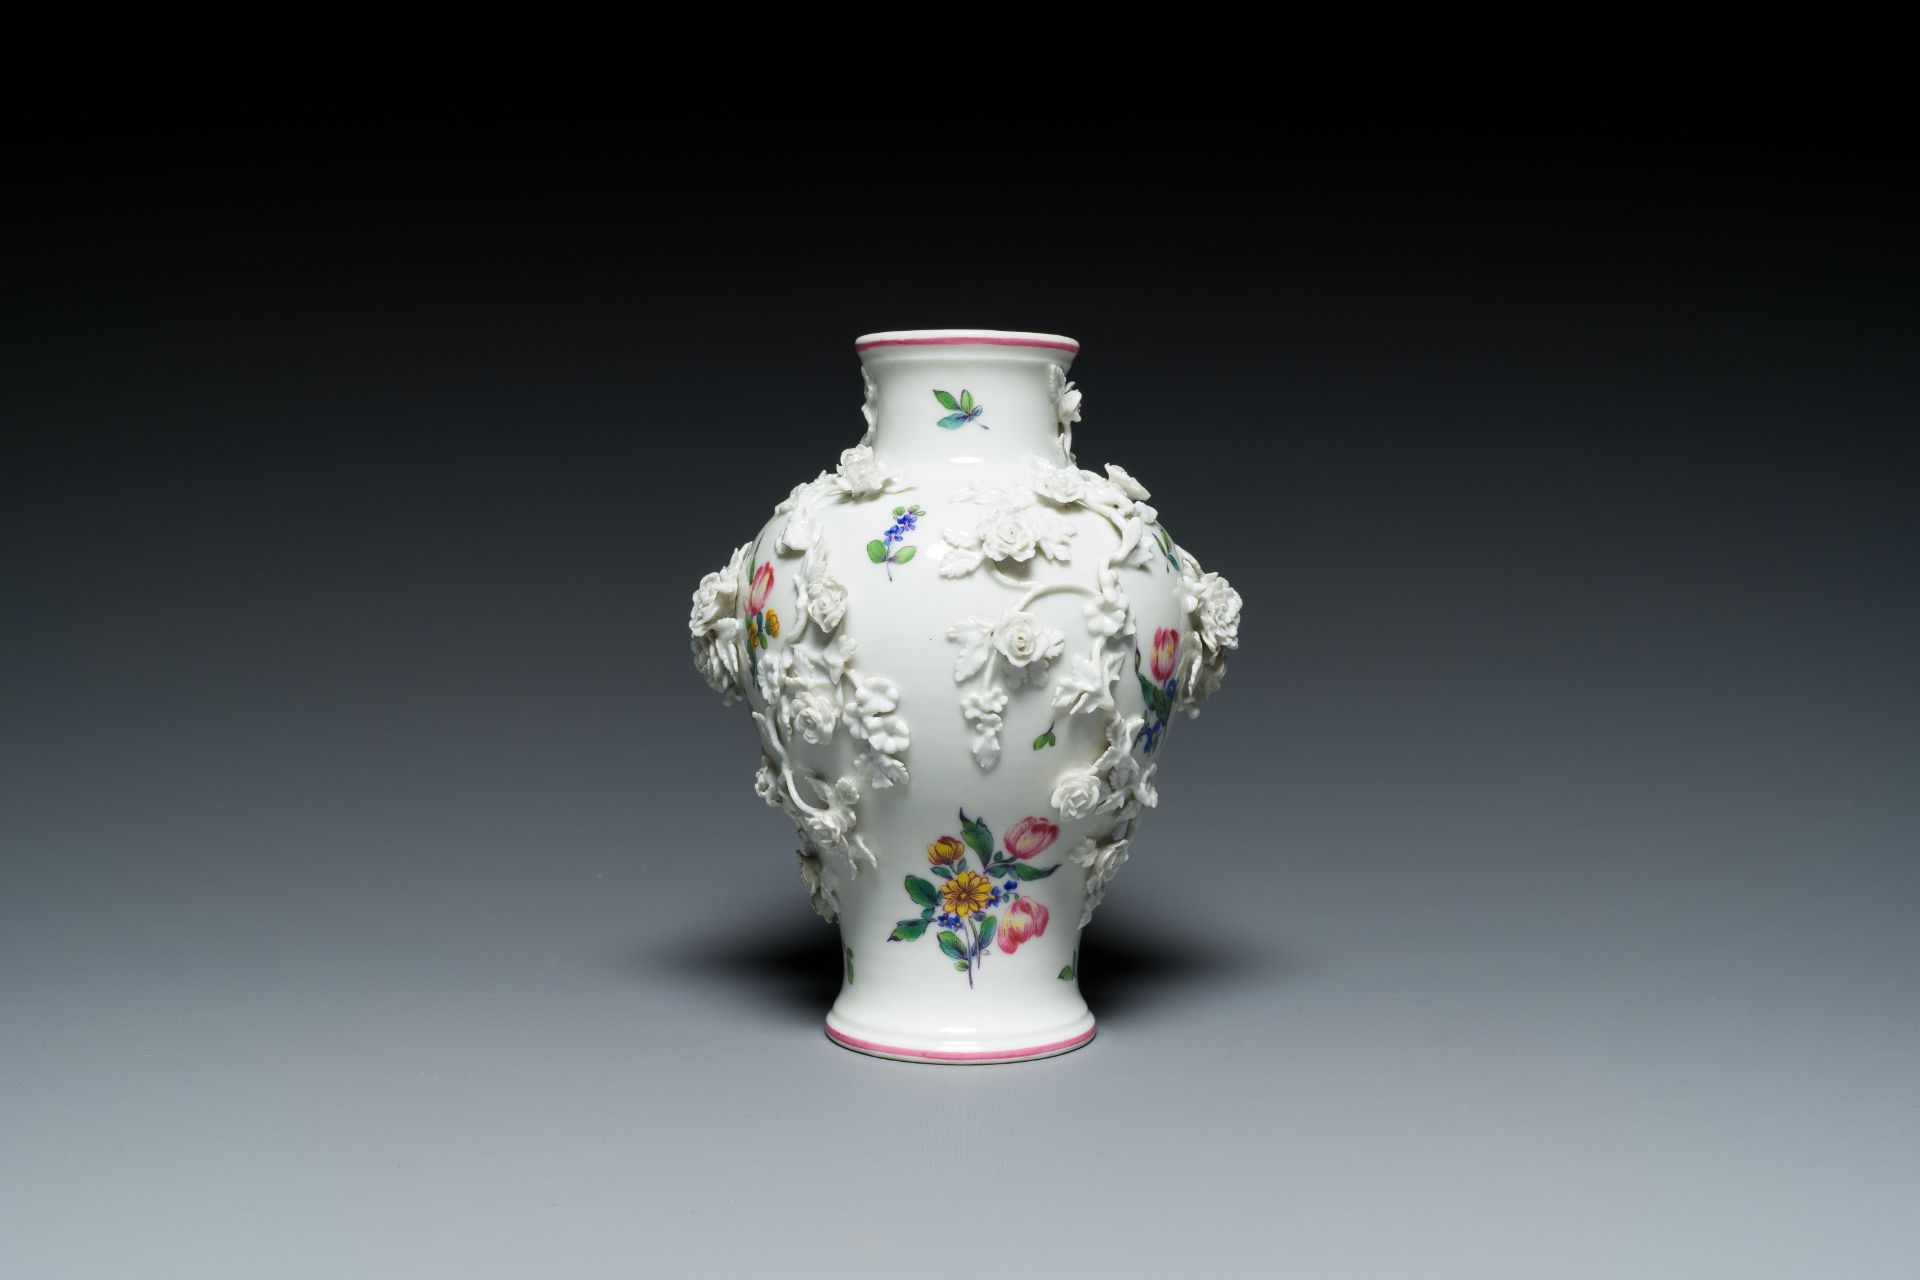 A Mennecy vase with applied floral design, France, DV mark, 18th C. - Image 10 of 16